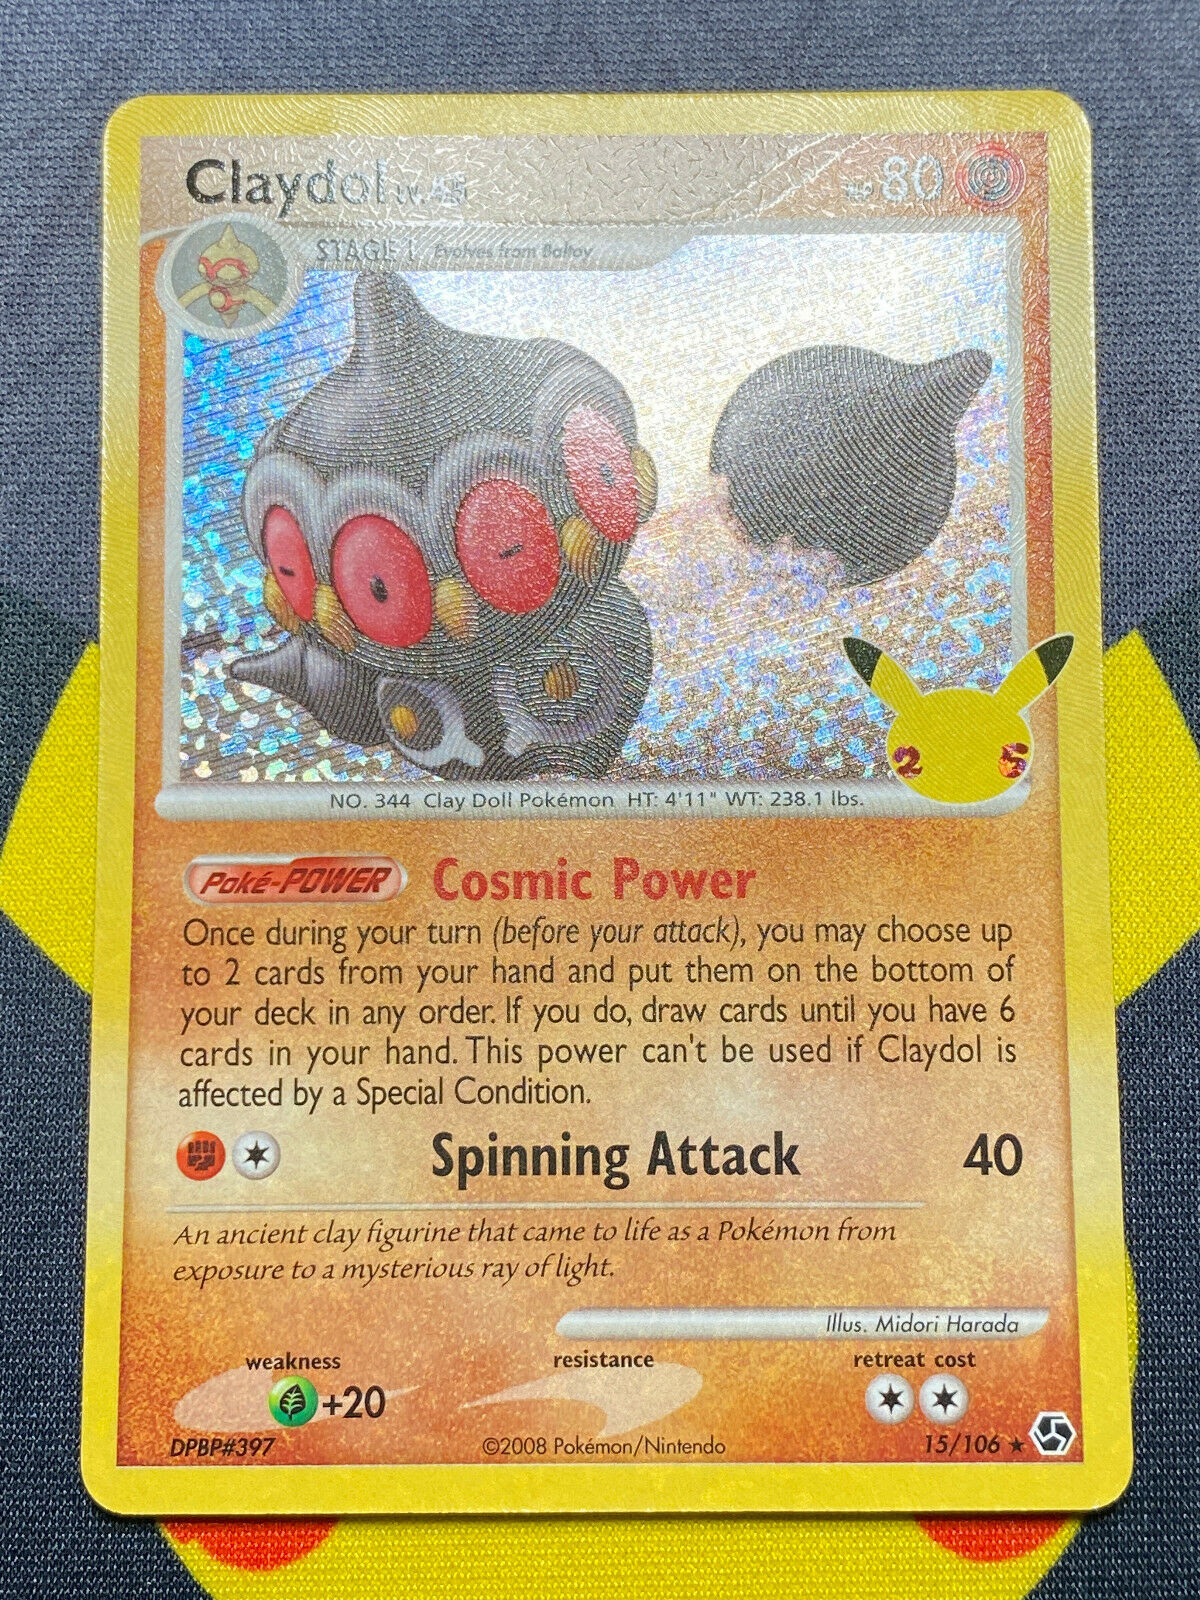 Pokémon Celebrations Claydoll 15/106 Holo Rare Collection Card NM